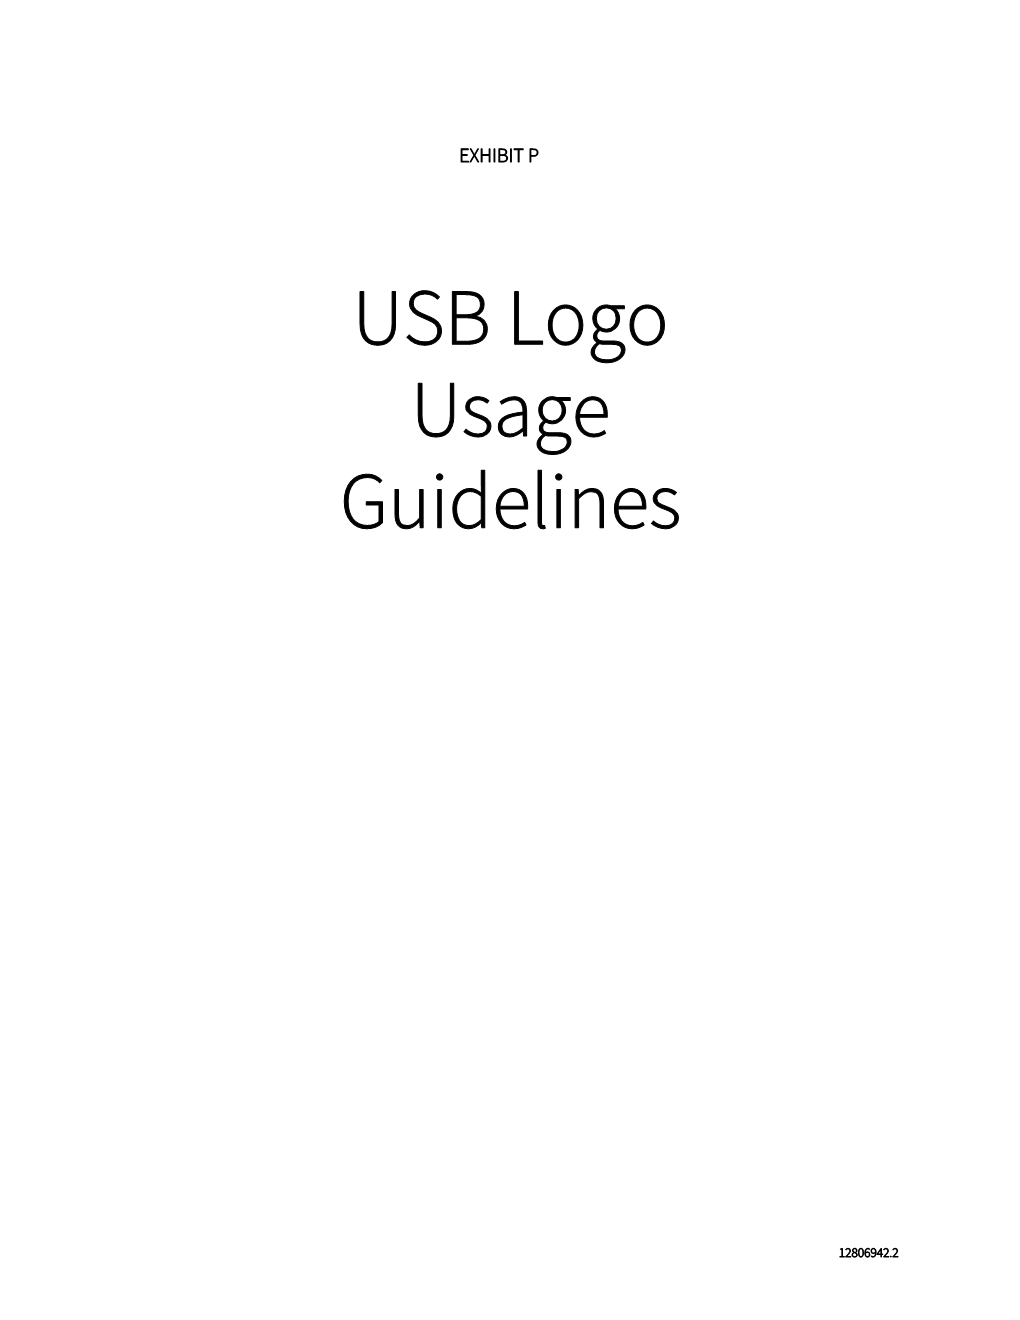 USB Logo Usage Guidelines